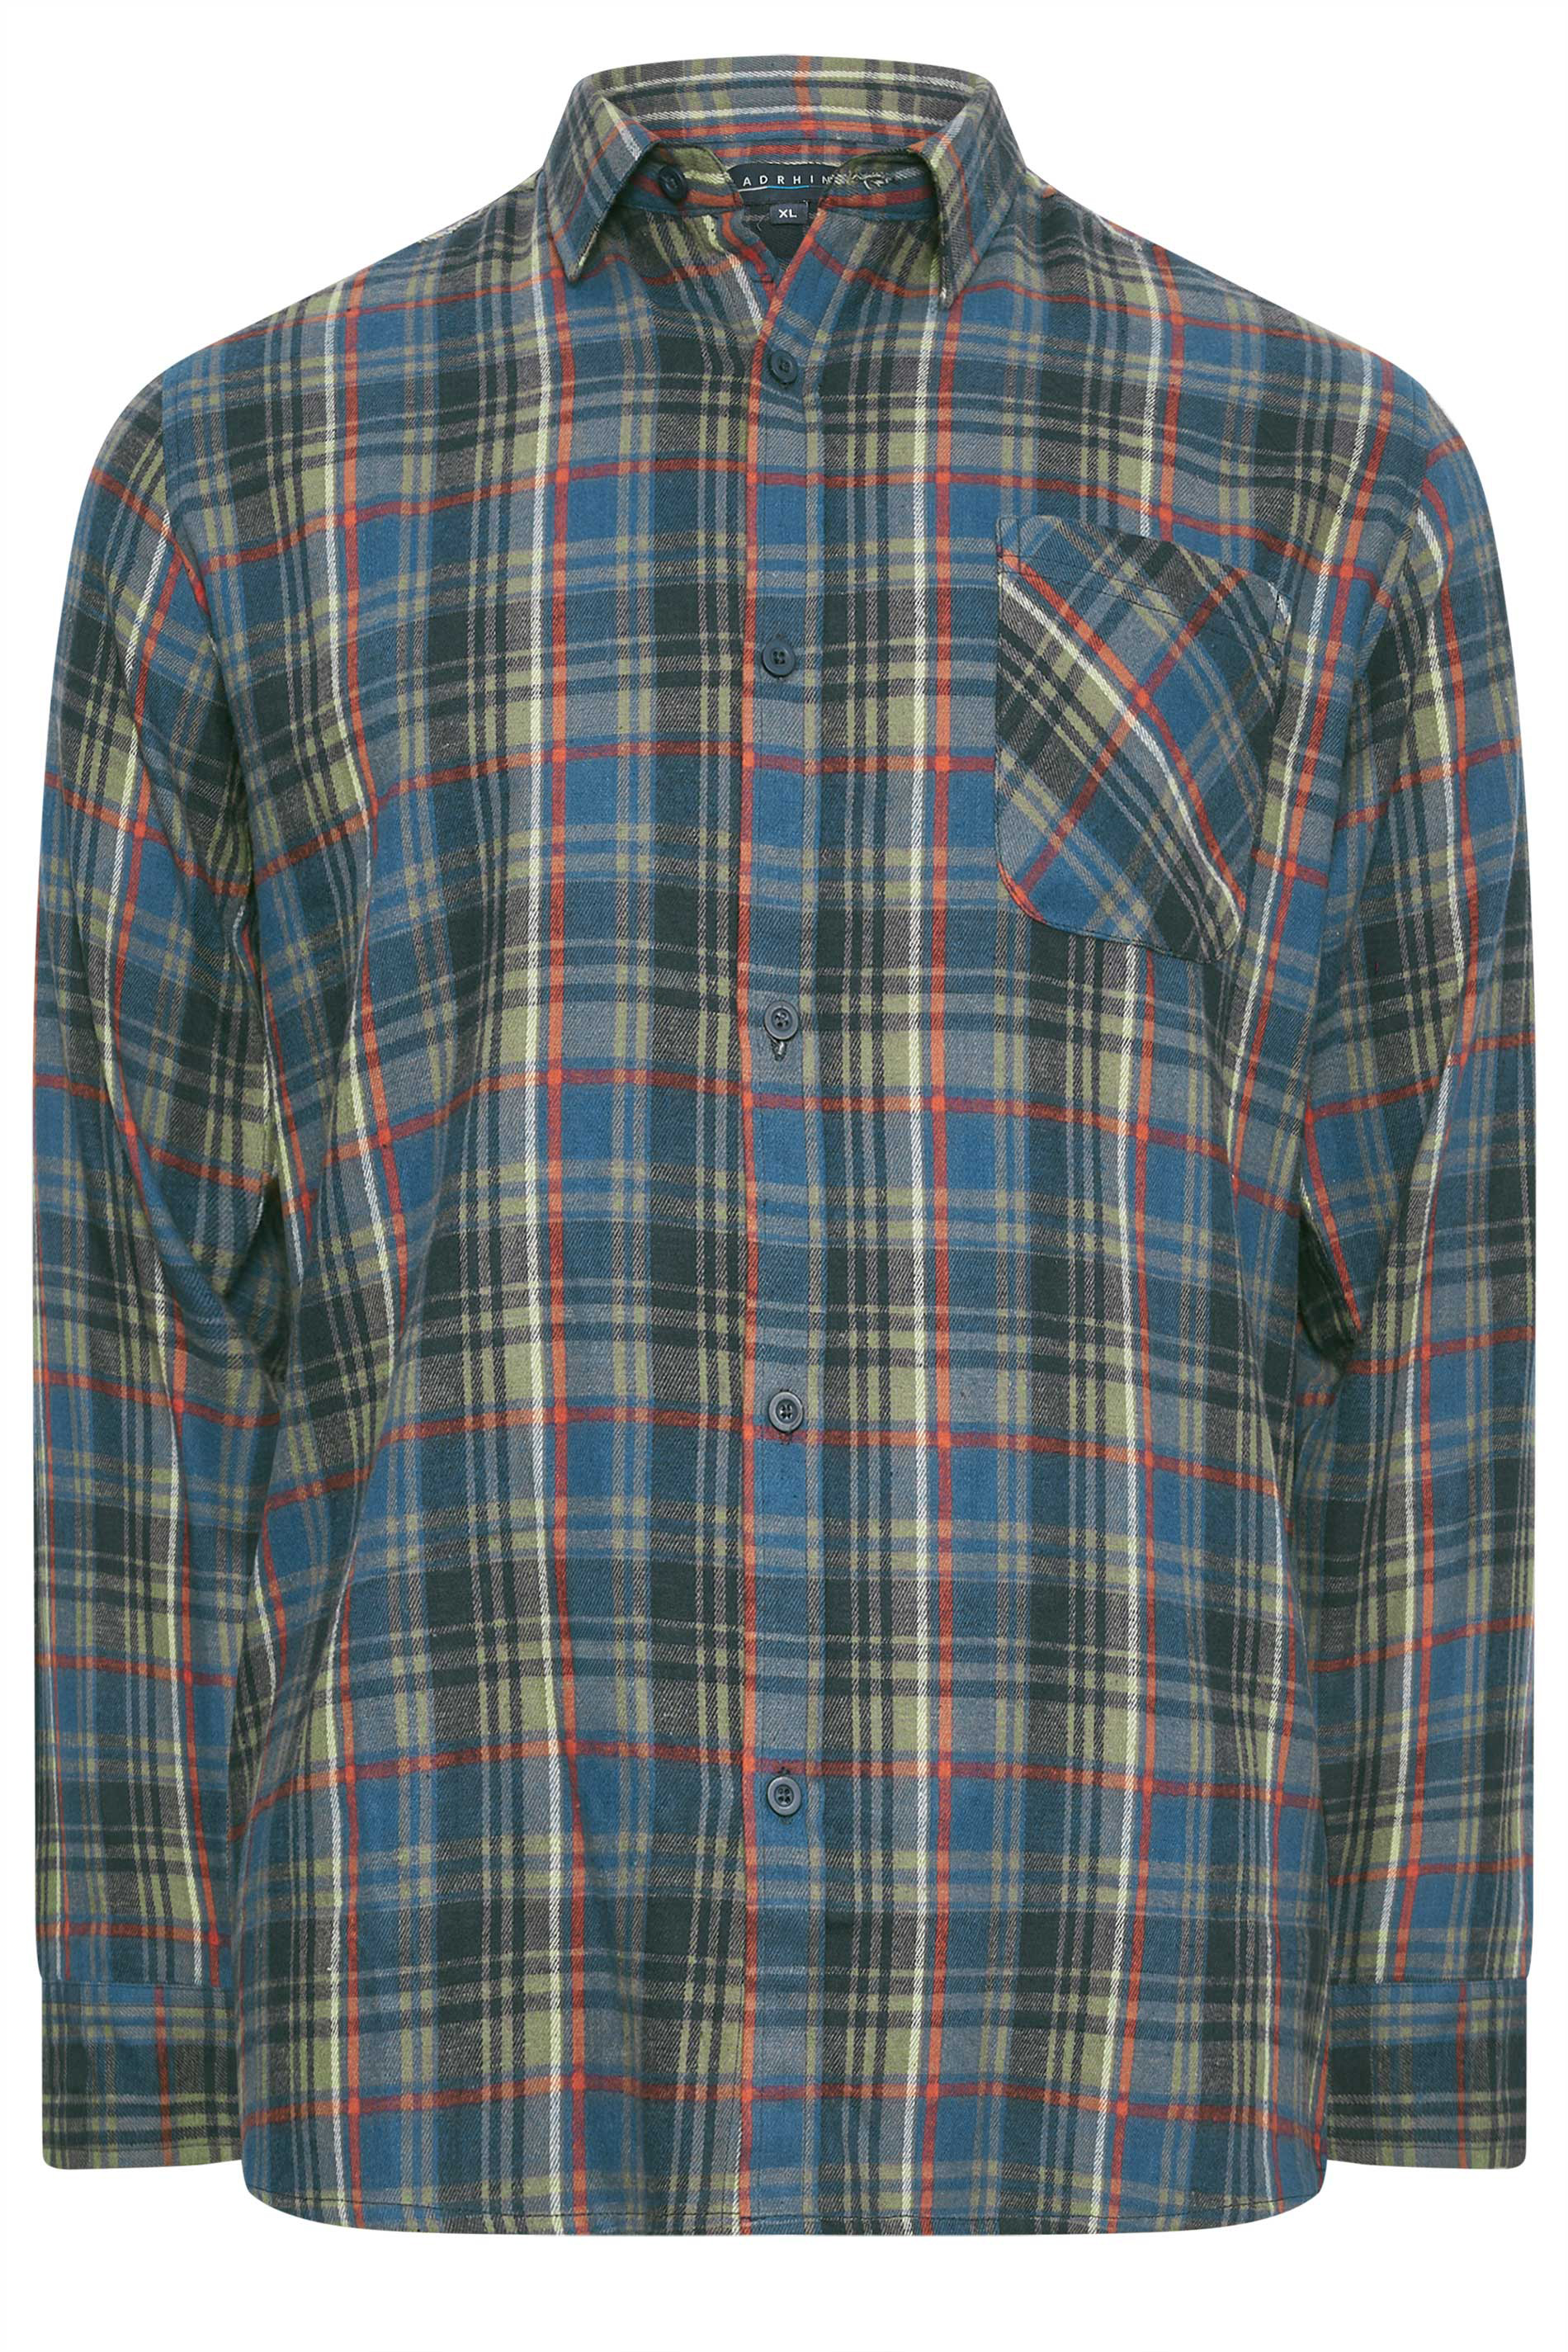 BadRhino Big & Tall Green & Blue Brushed Cotton Check Long Sleeve Shirt 2